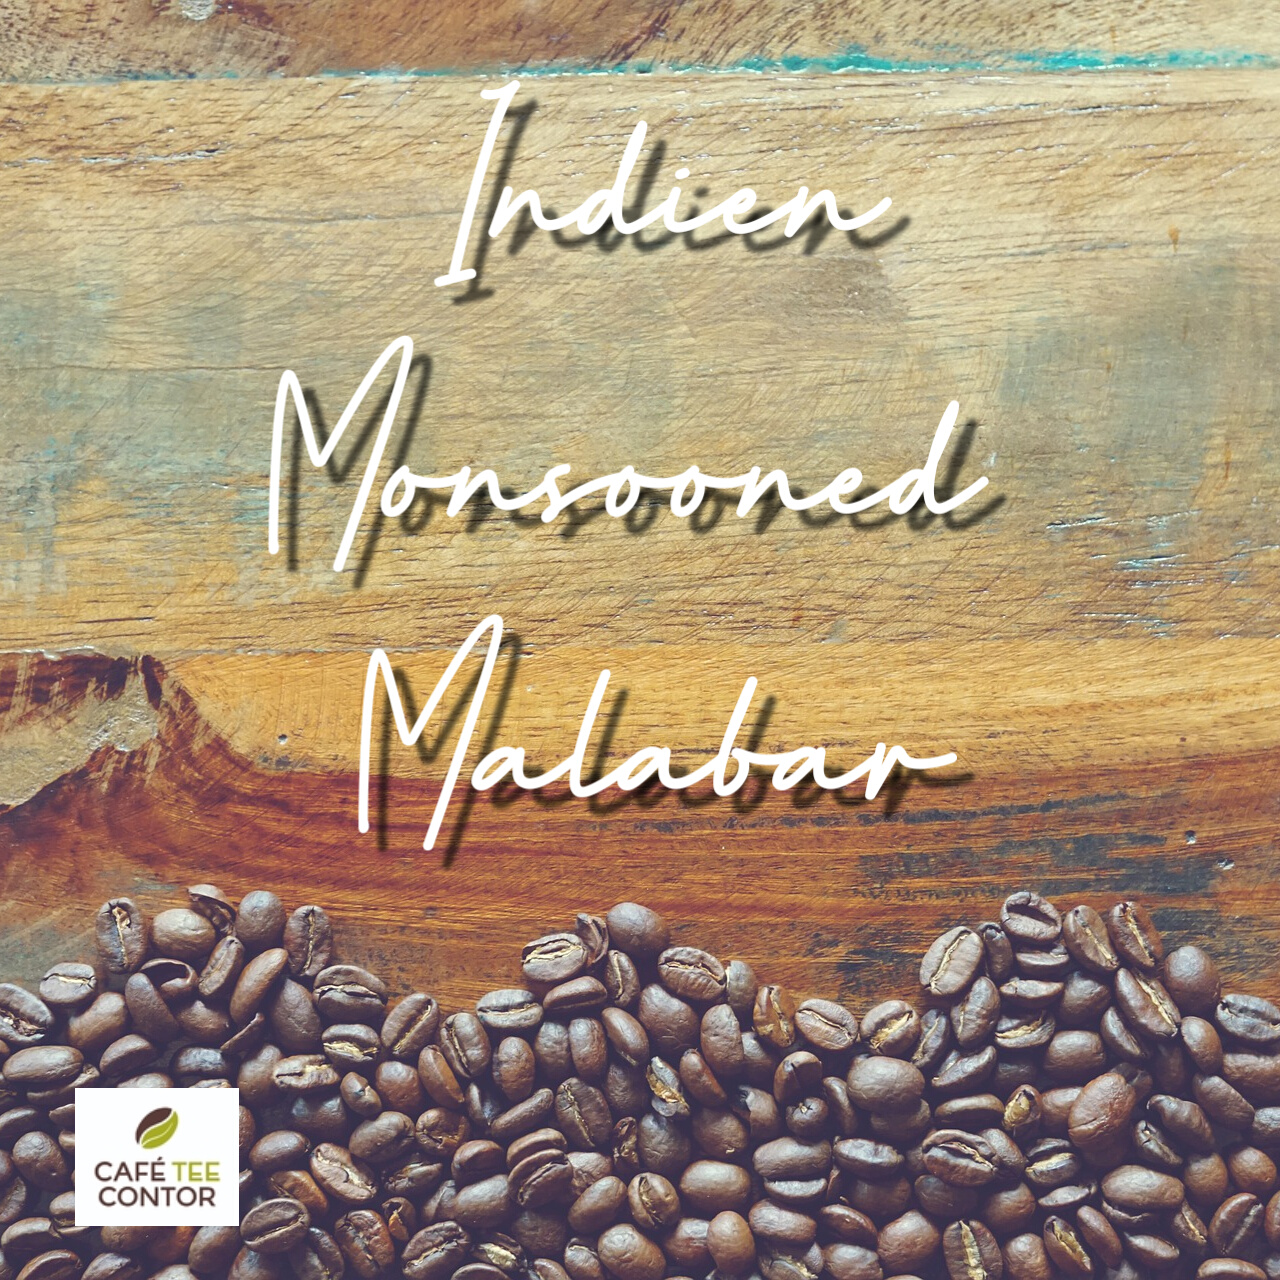 Kaffee Indien Monsooned Malabar